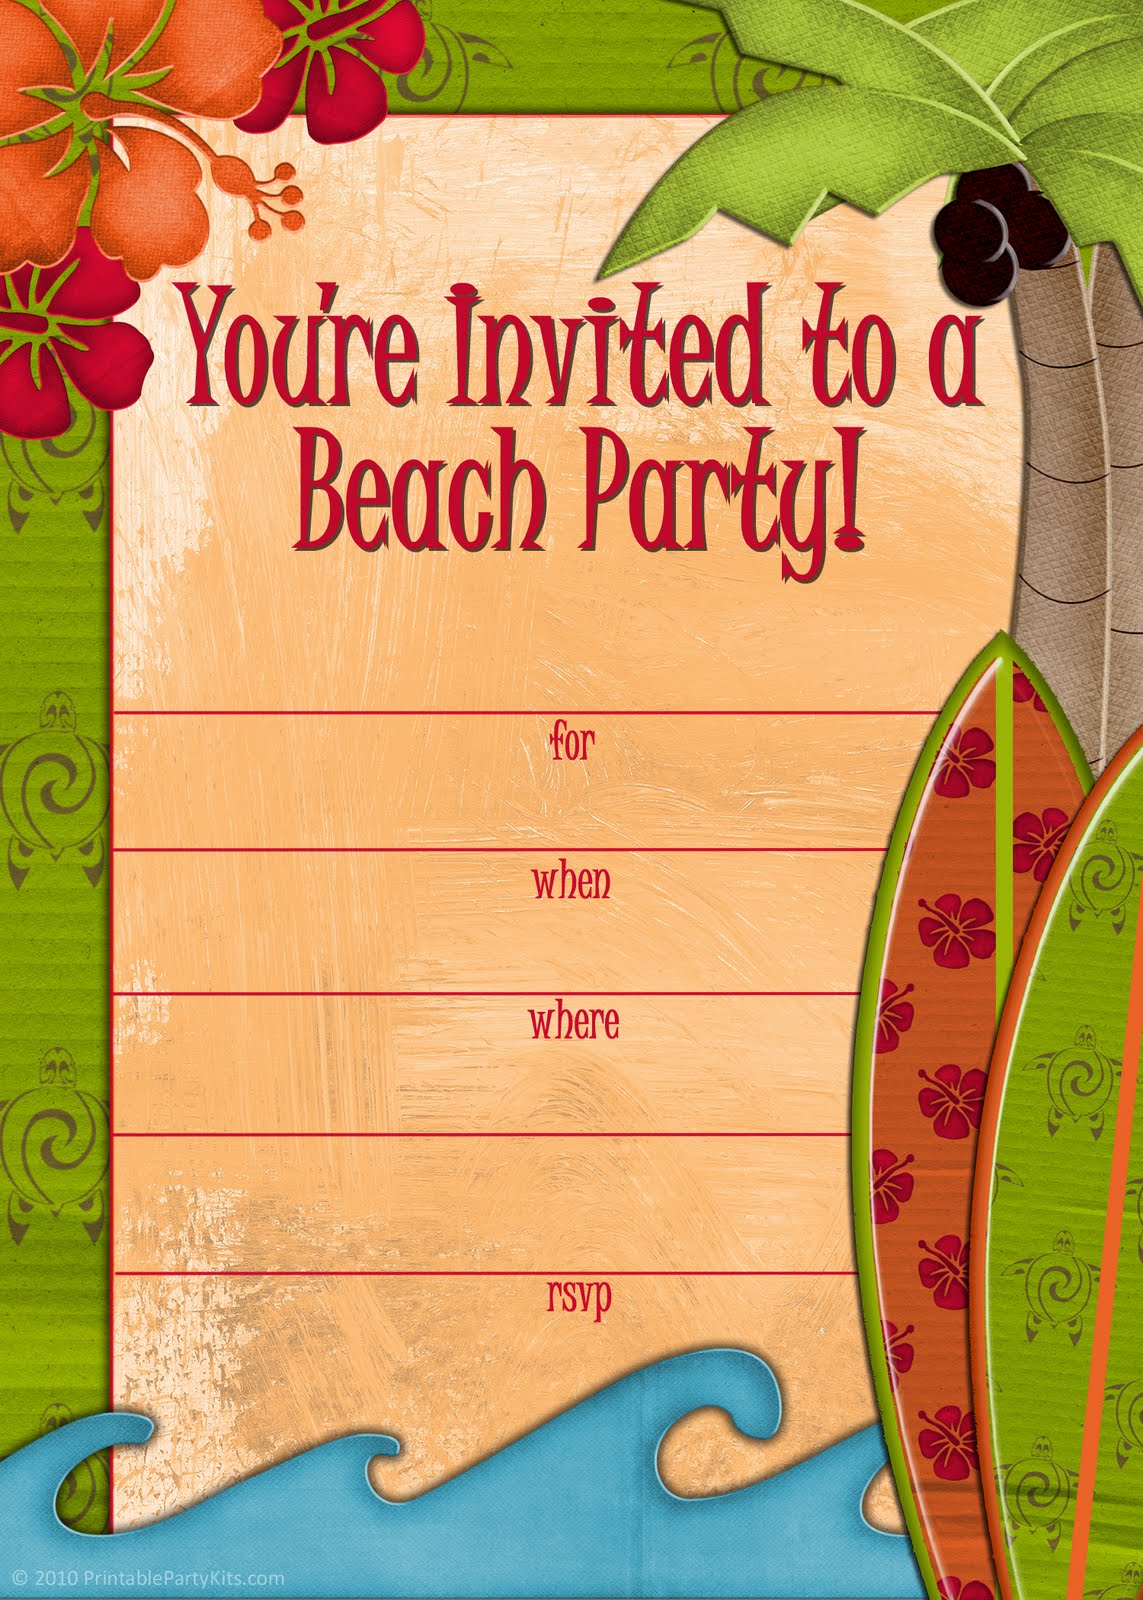 8-best-images-of-free-beach-printable-birthday-invitations-beach